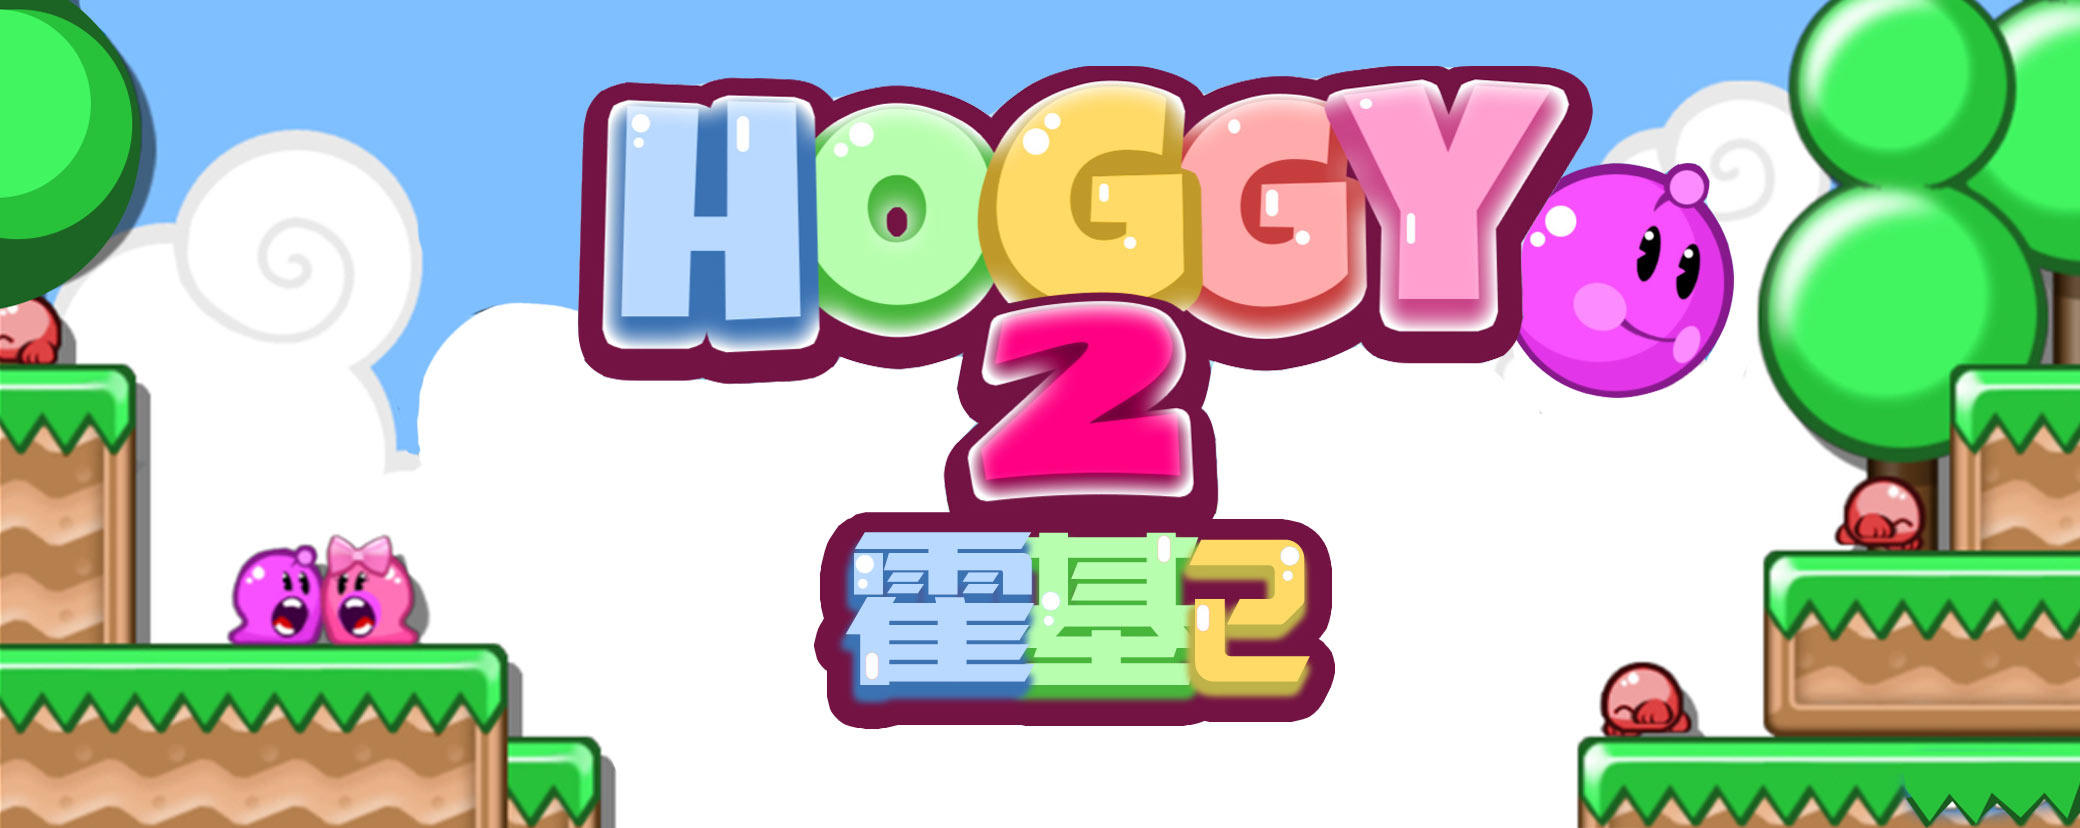 Banner of हॉगी 2 1.8.3